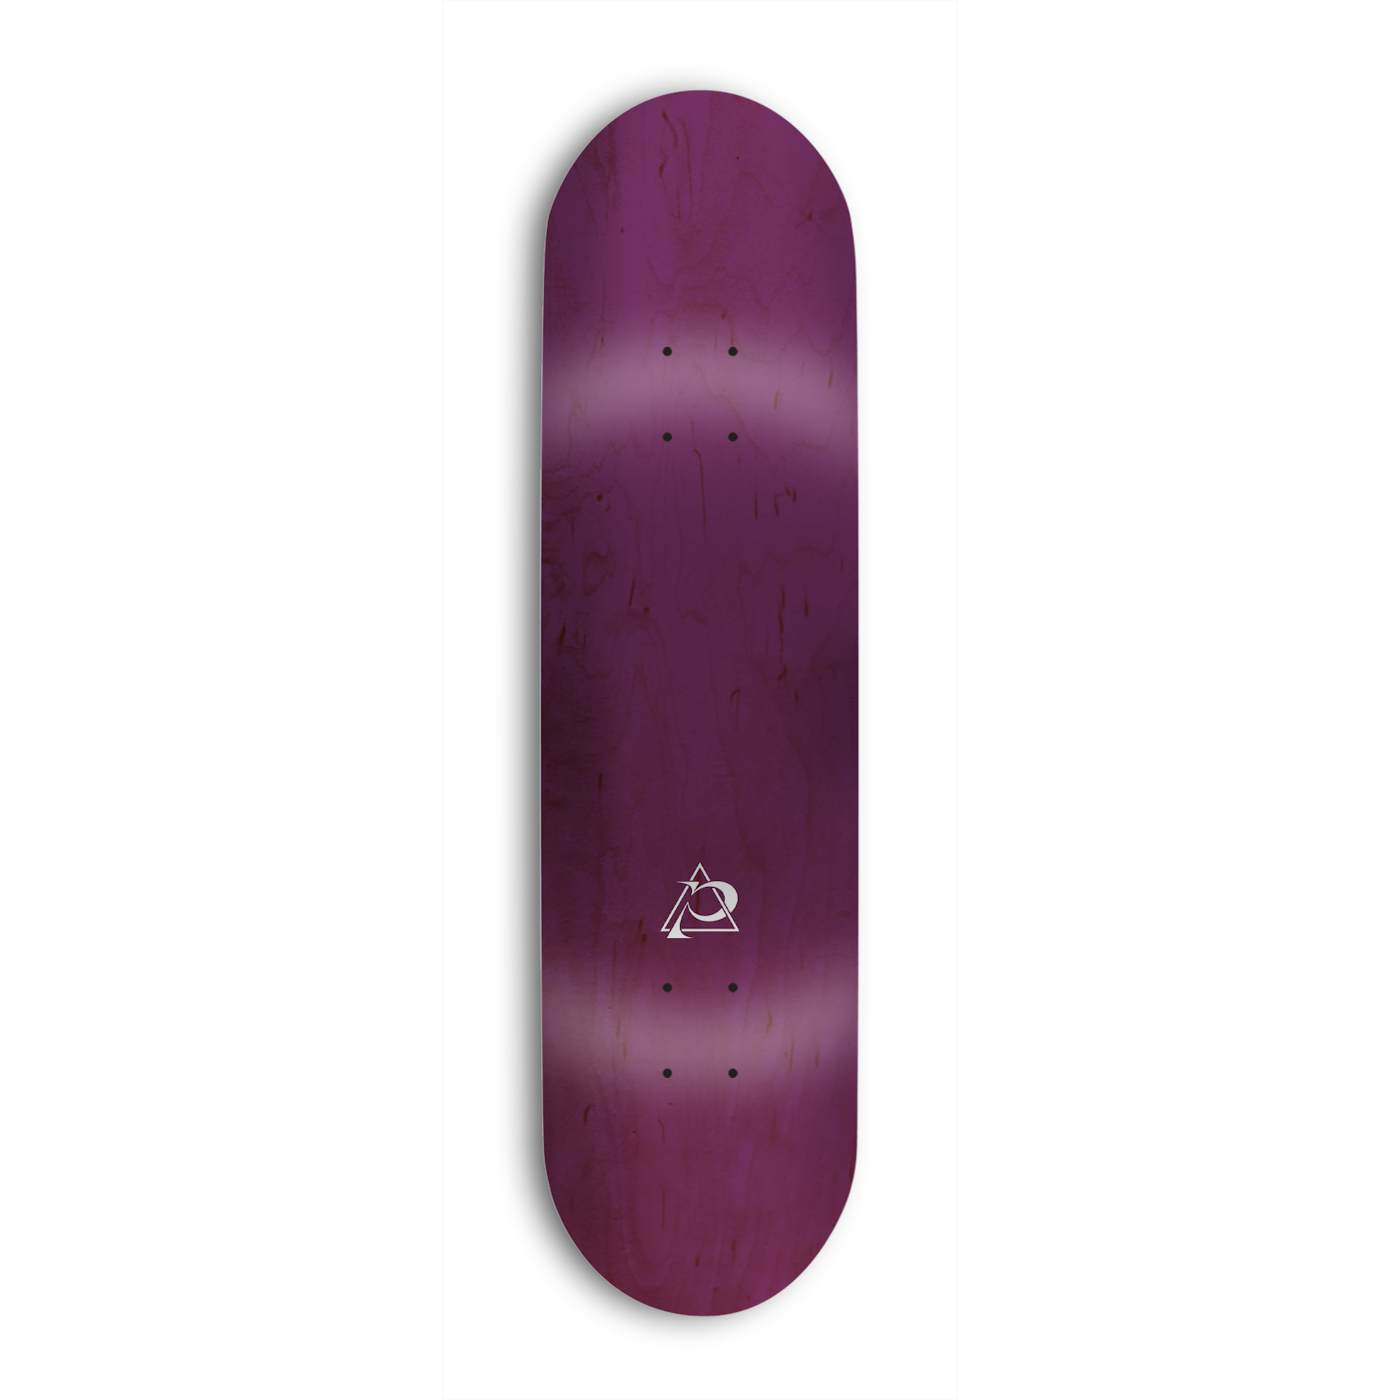 Poppy Sword Skateboard Deck